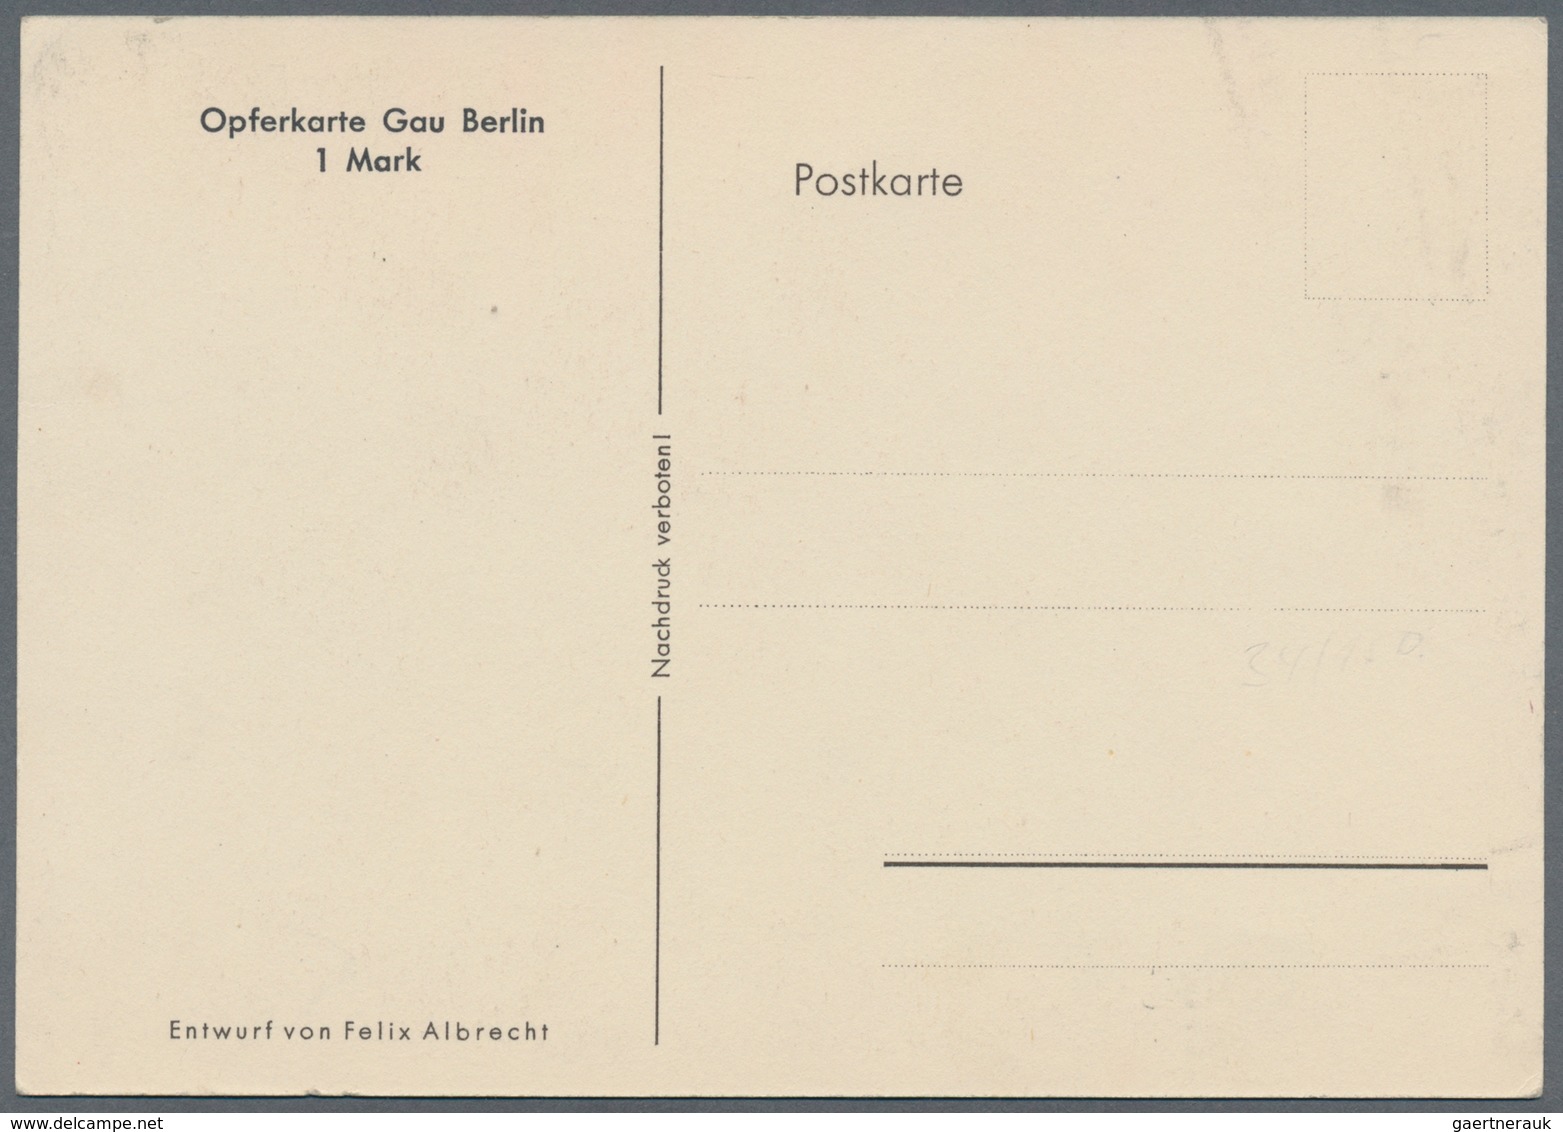 Ansichtskarten: Propaganda: 1931. Scarce Original Early Donation / Opferkarte Gau Berlin Propaganda - Parteien & Wahlen